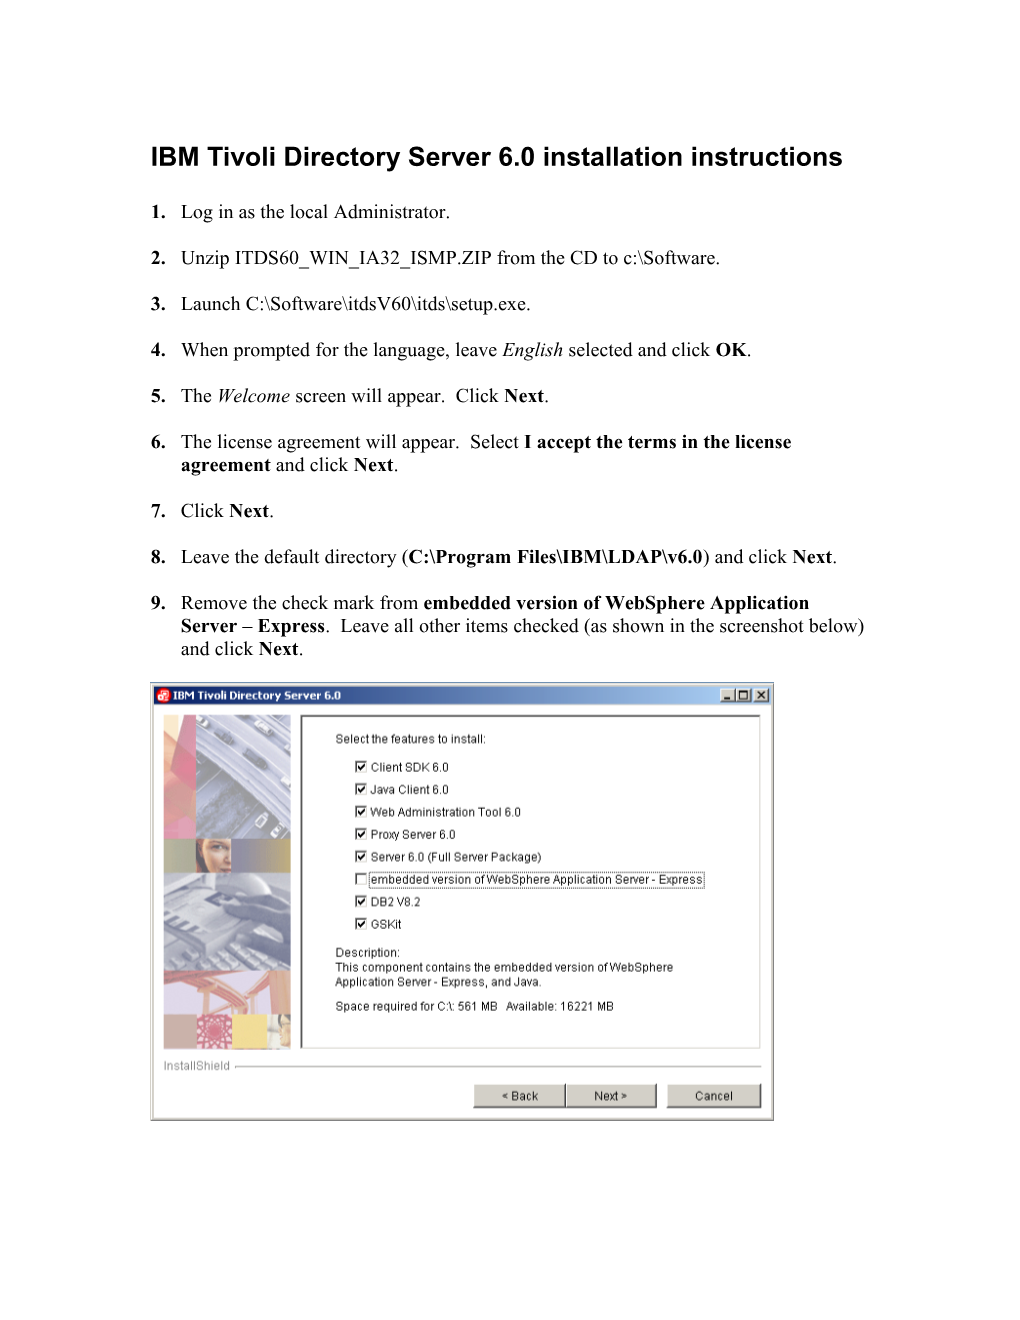 Tivoli Directory Server 6